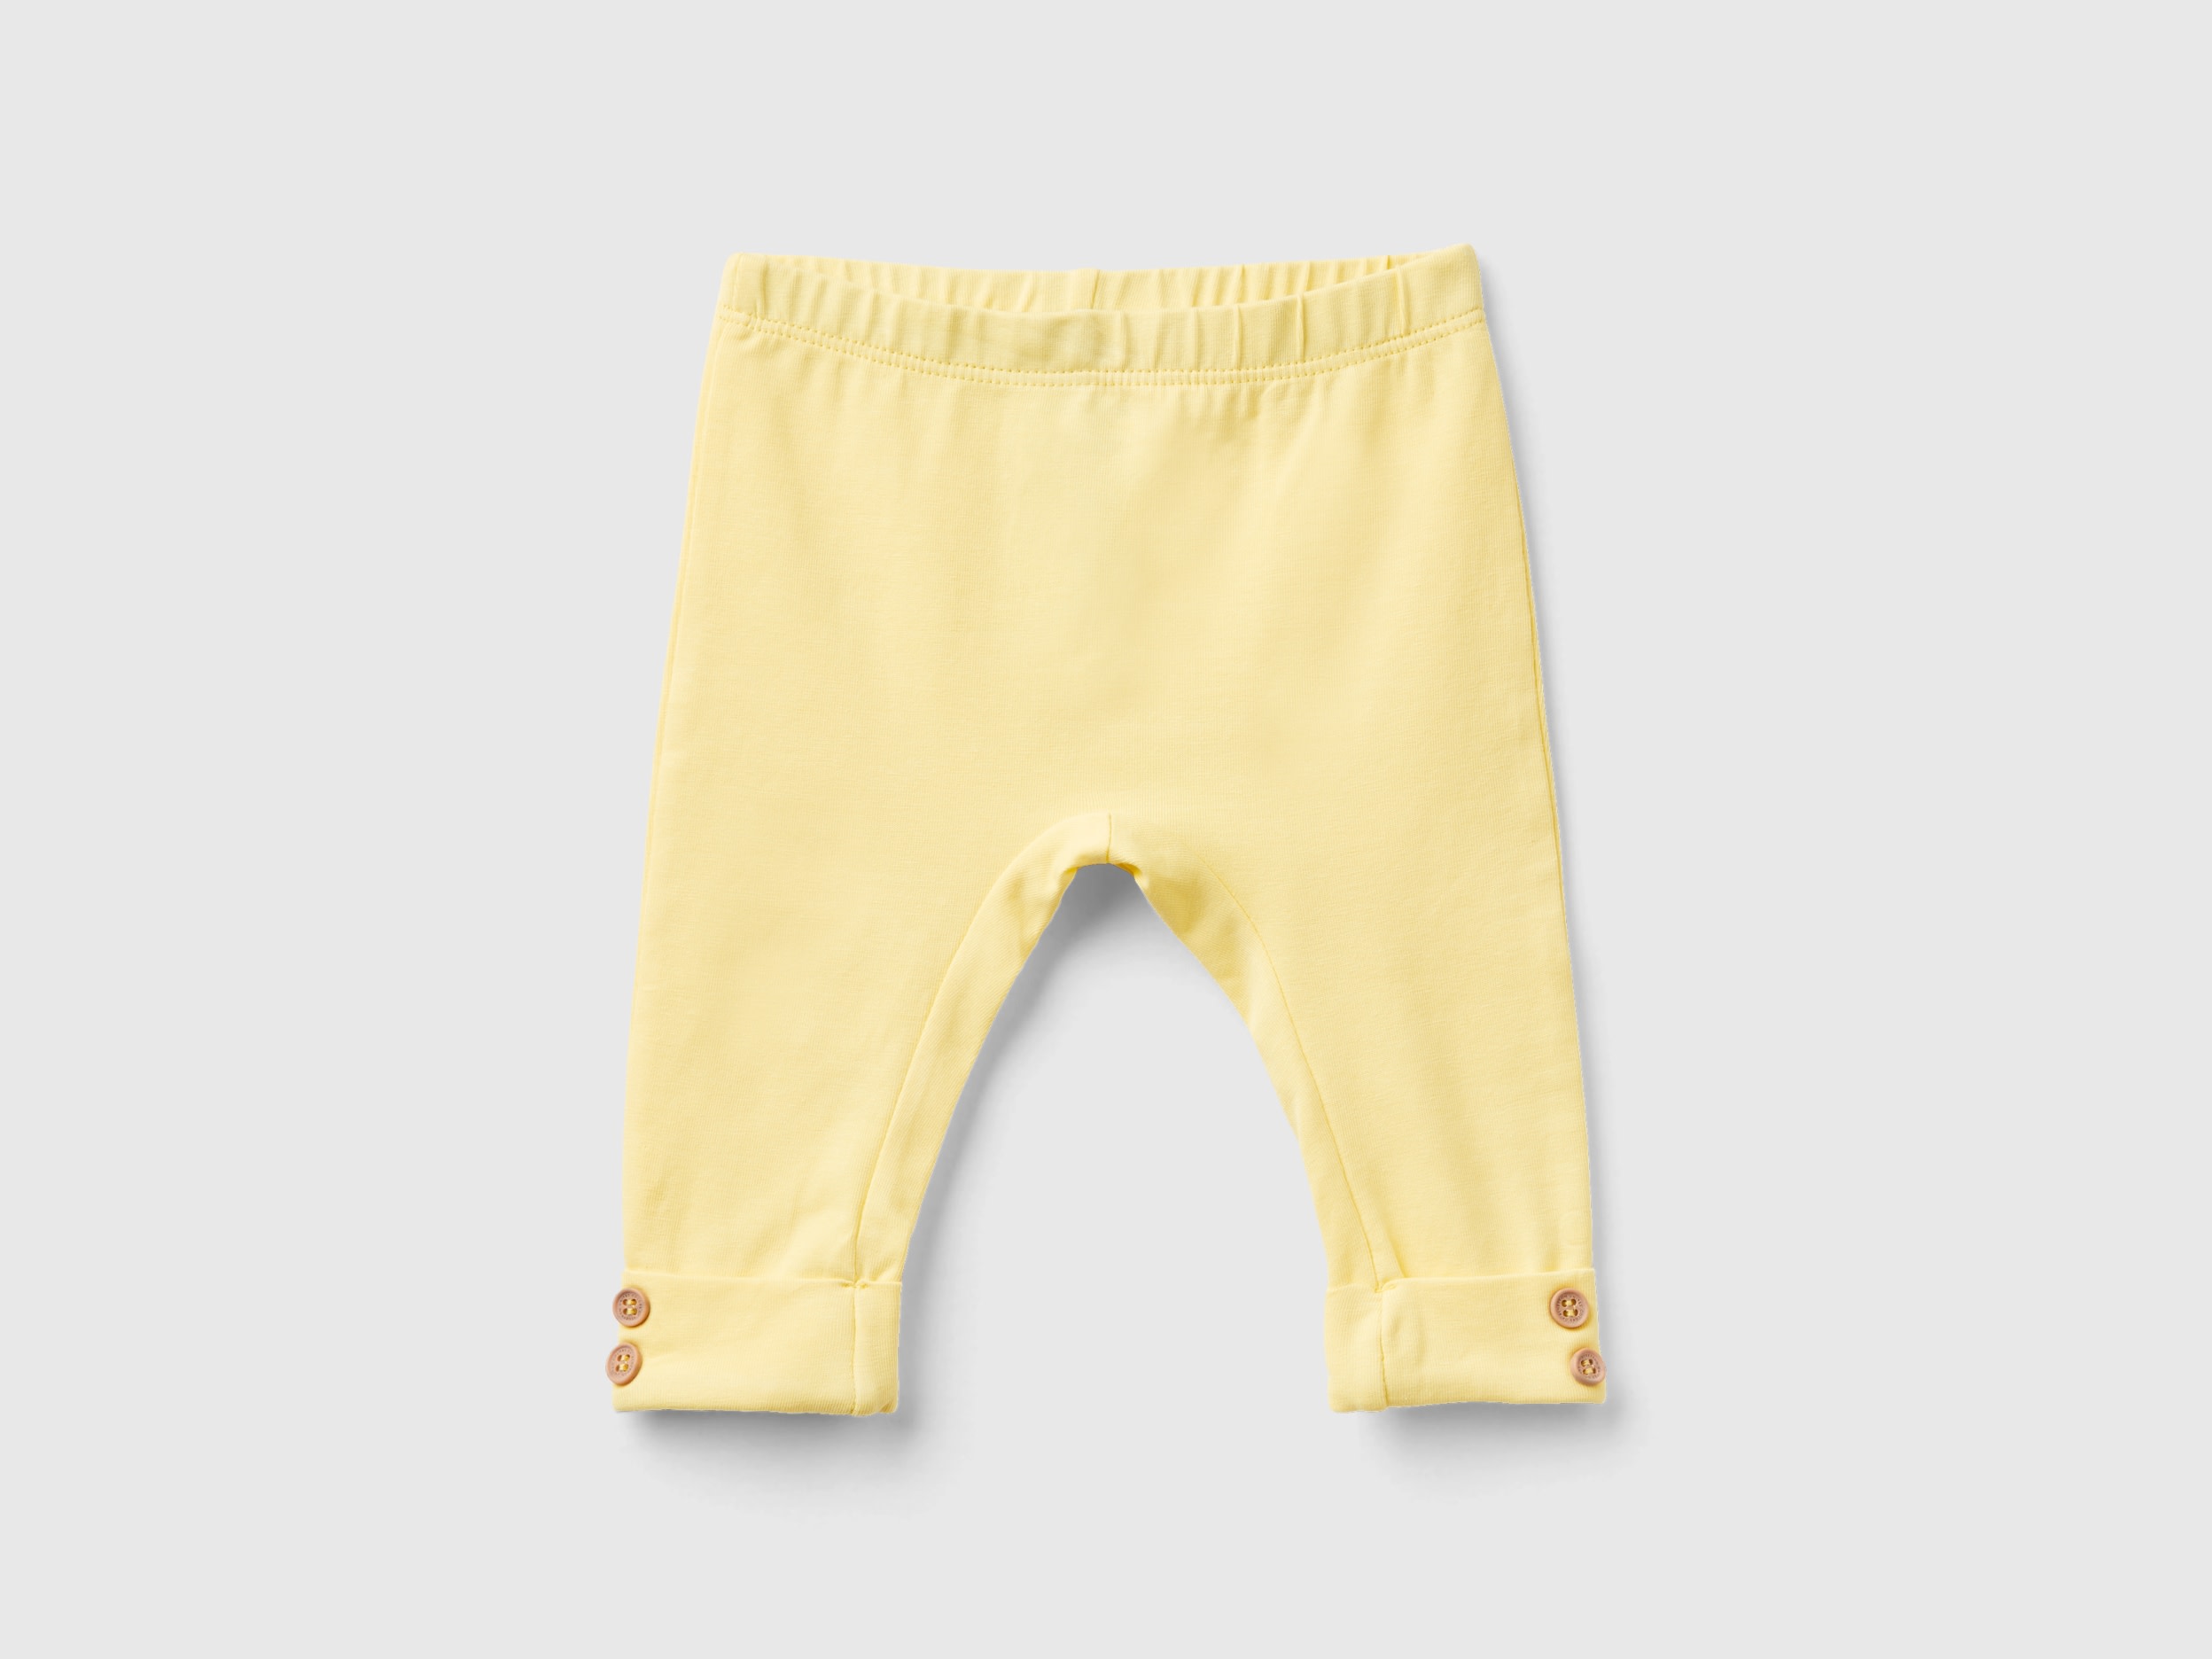 Benetton, Stretch Cotton Leggings, size 6-9, Yellow, Kids